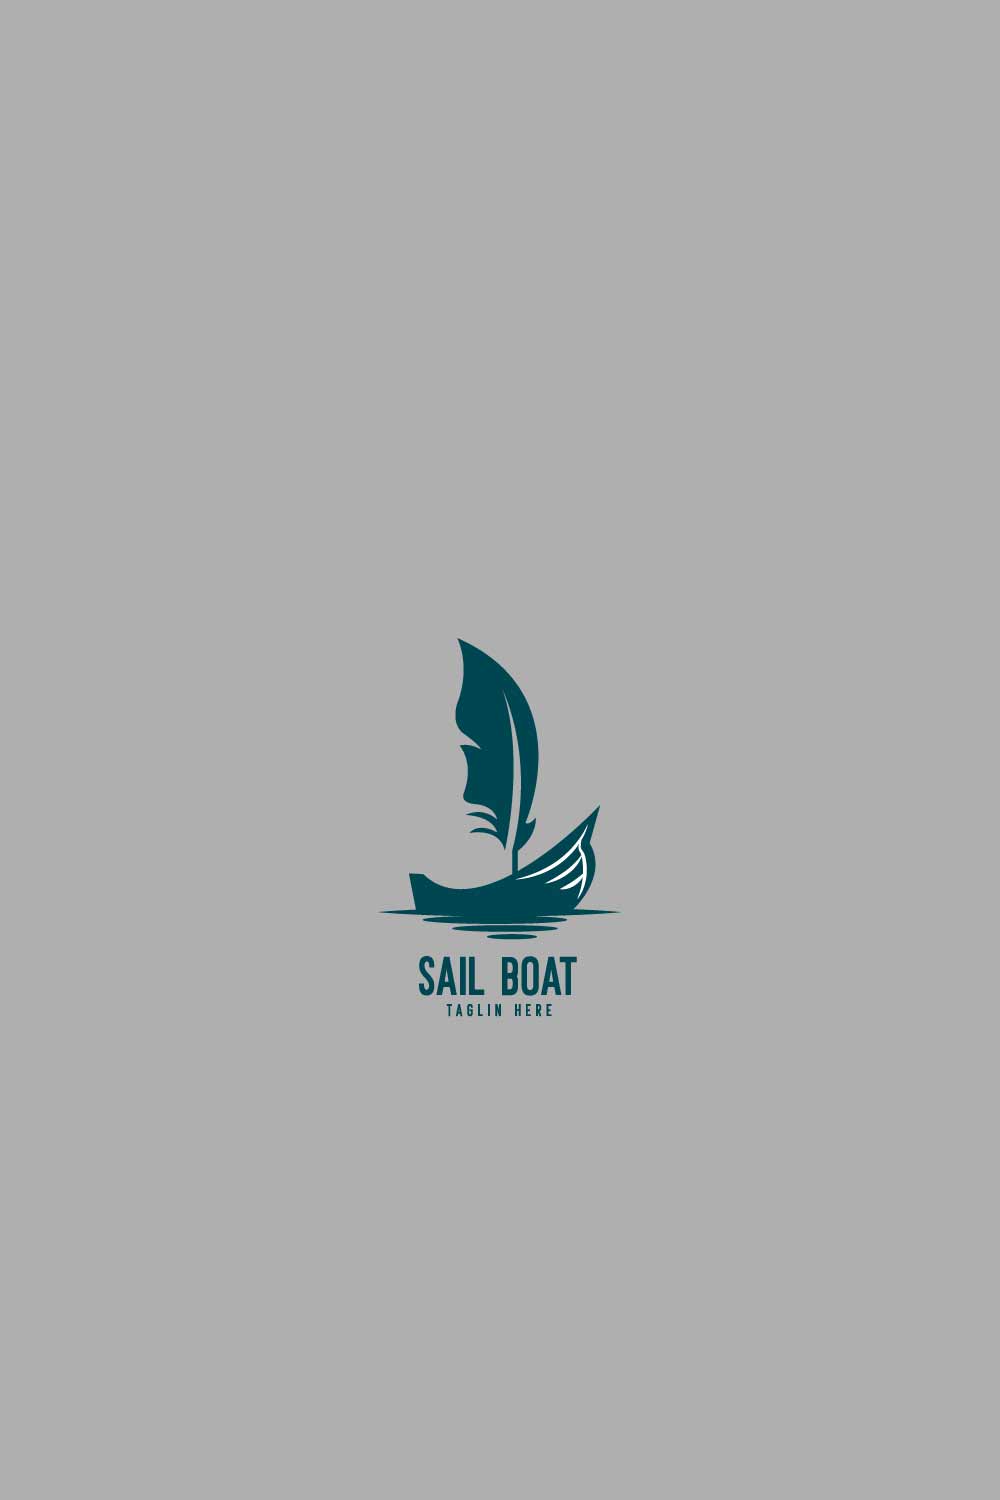 Premium Sailboat Logo Design Vector pinterest preview image.